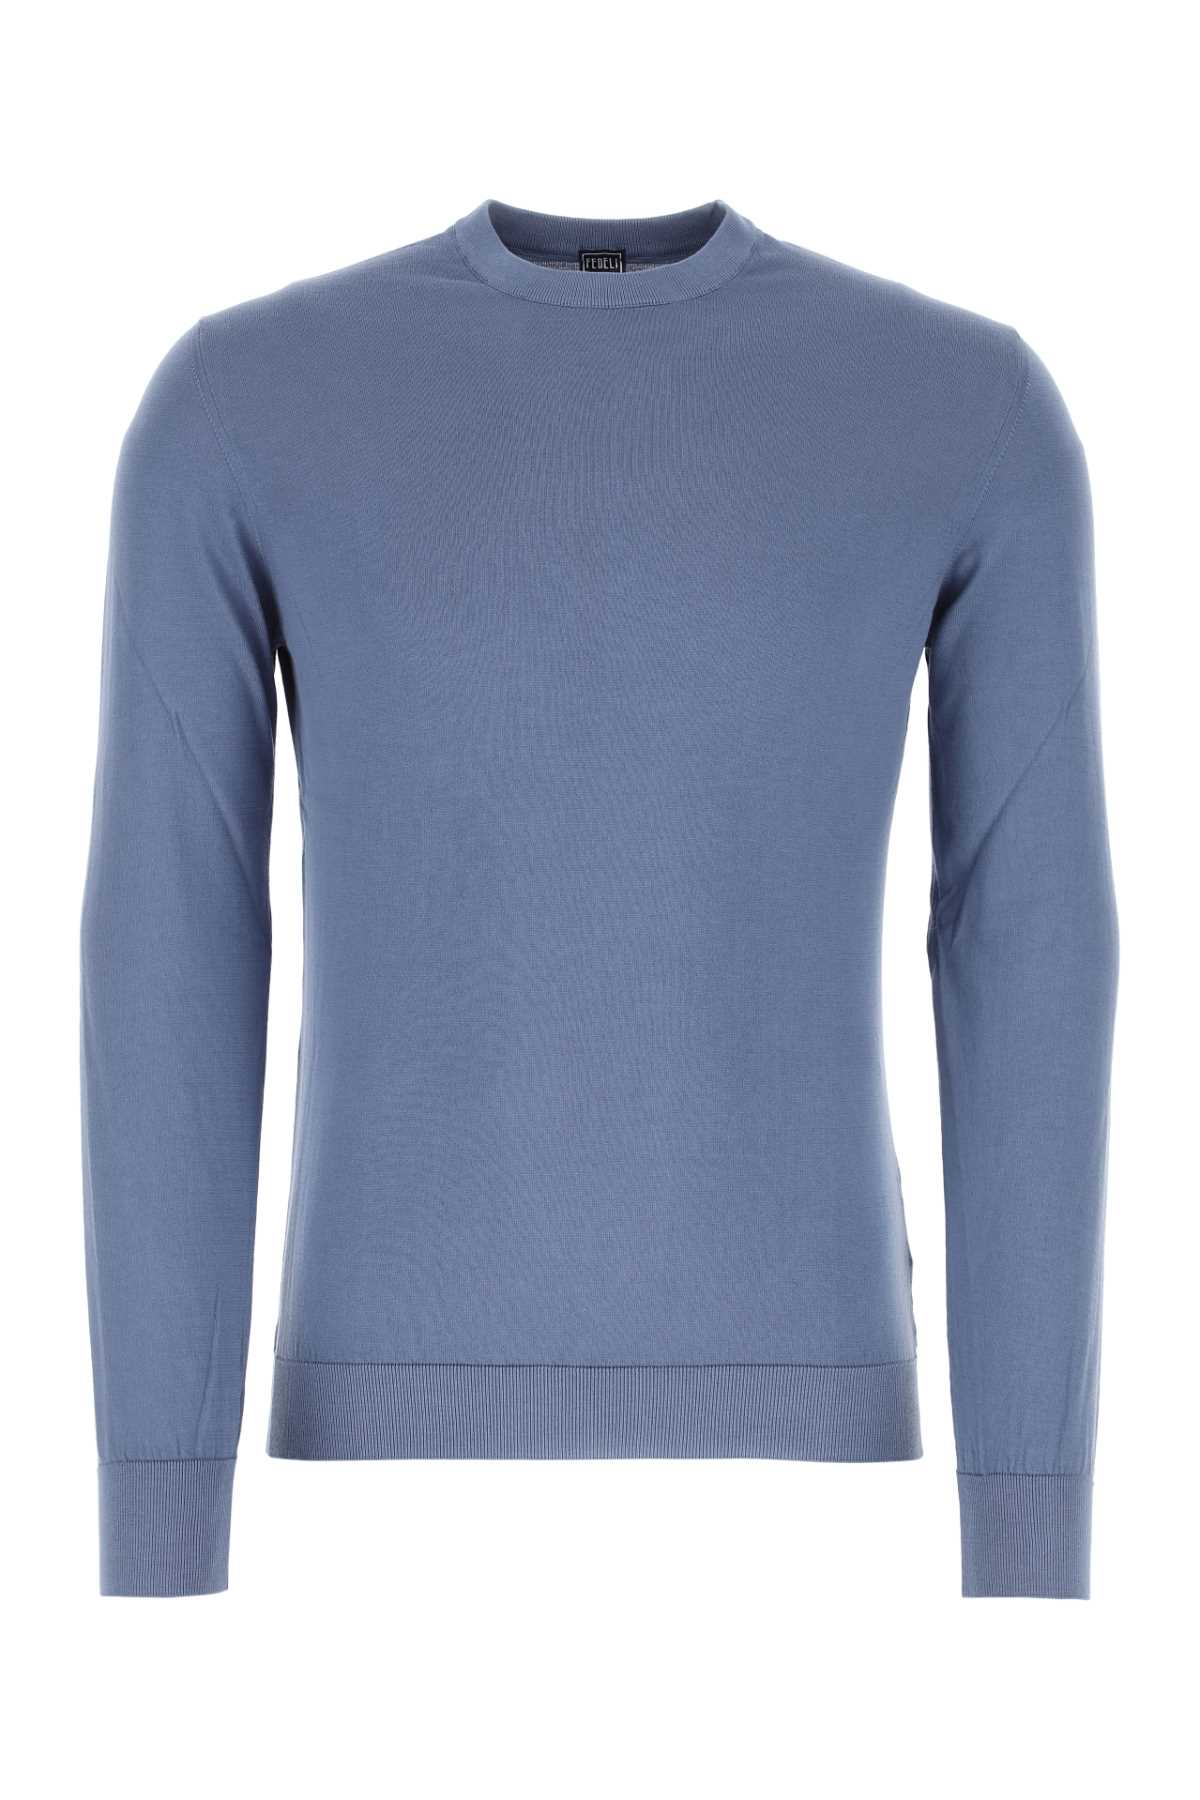 Powder Blue Cotton Sweater